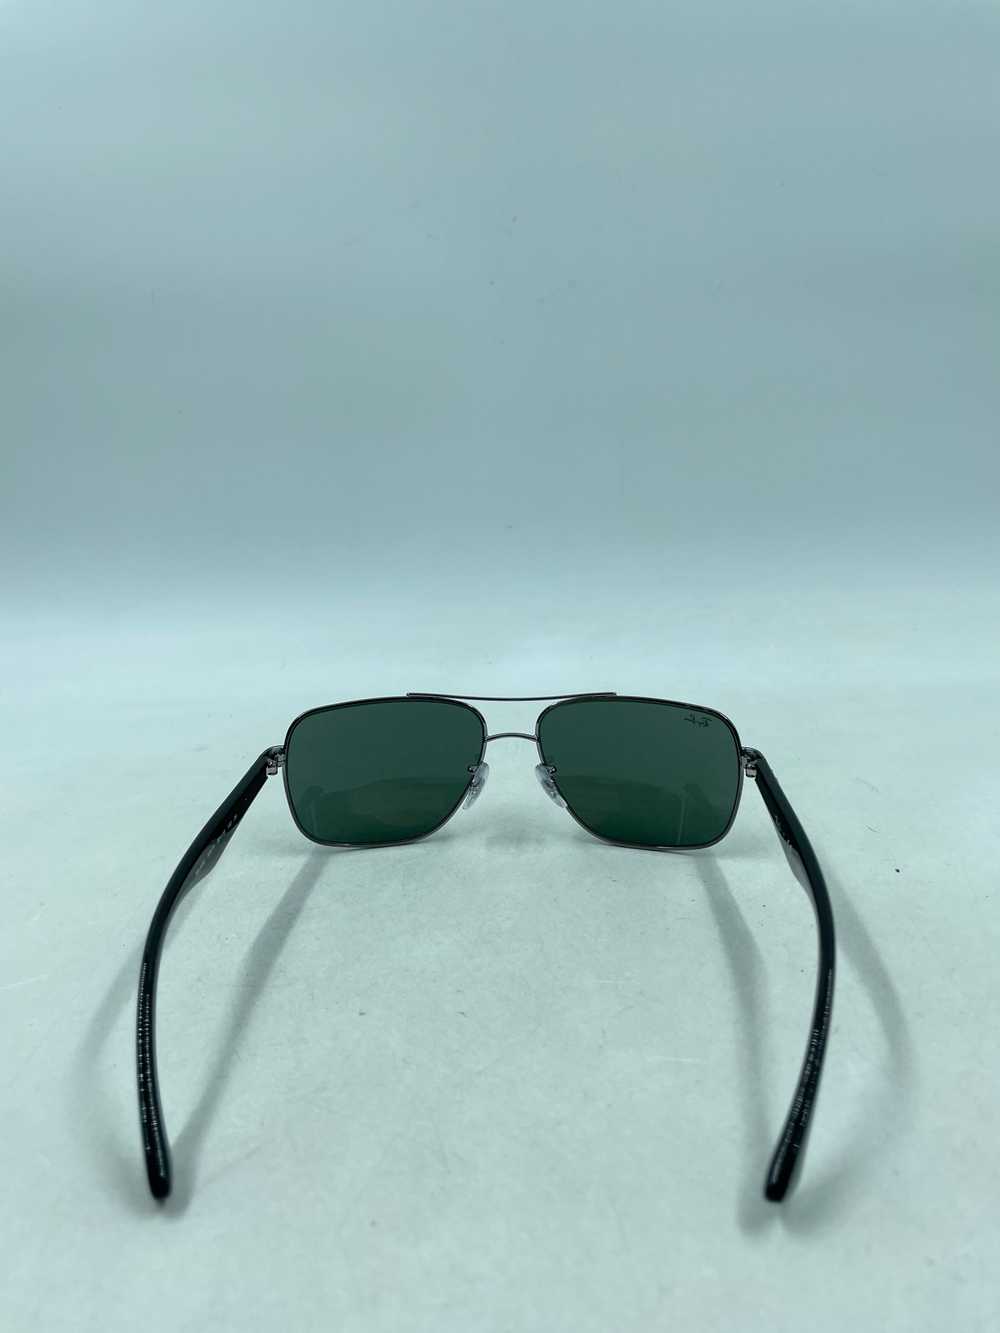 Ray-Ban Silver Pilot Sunglasses - image 3